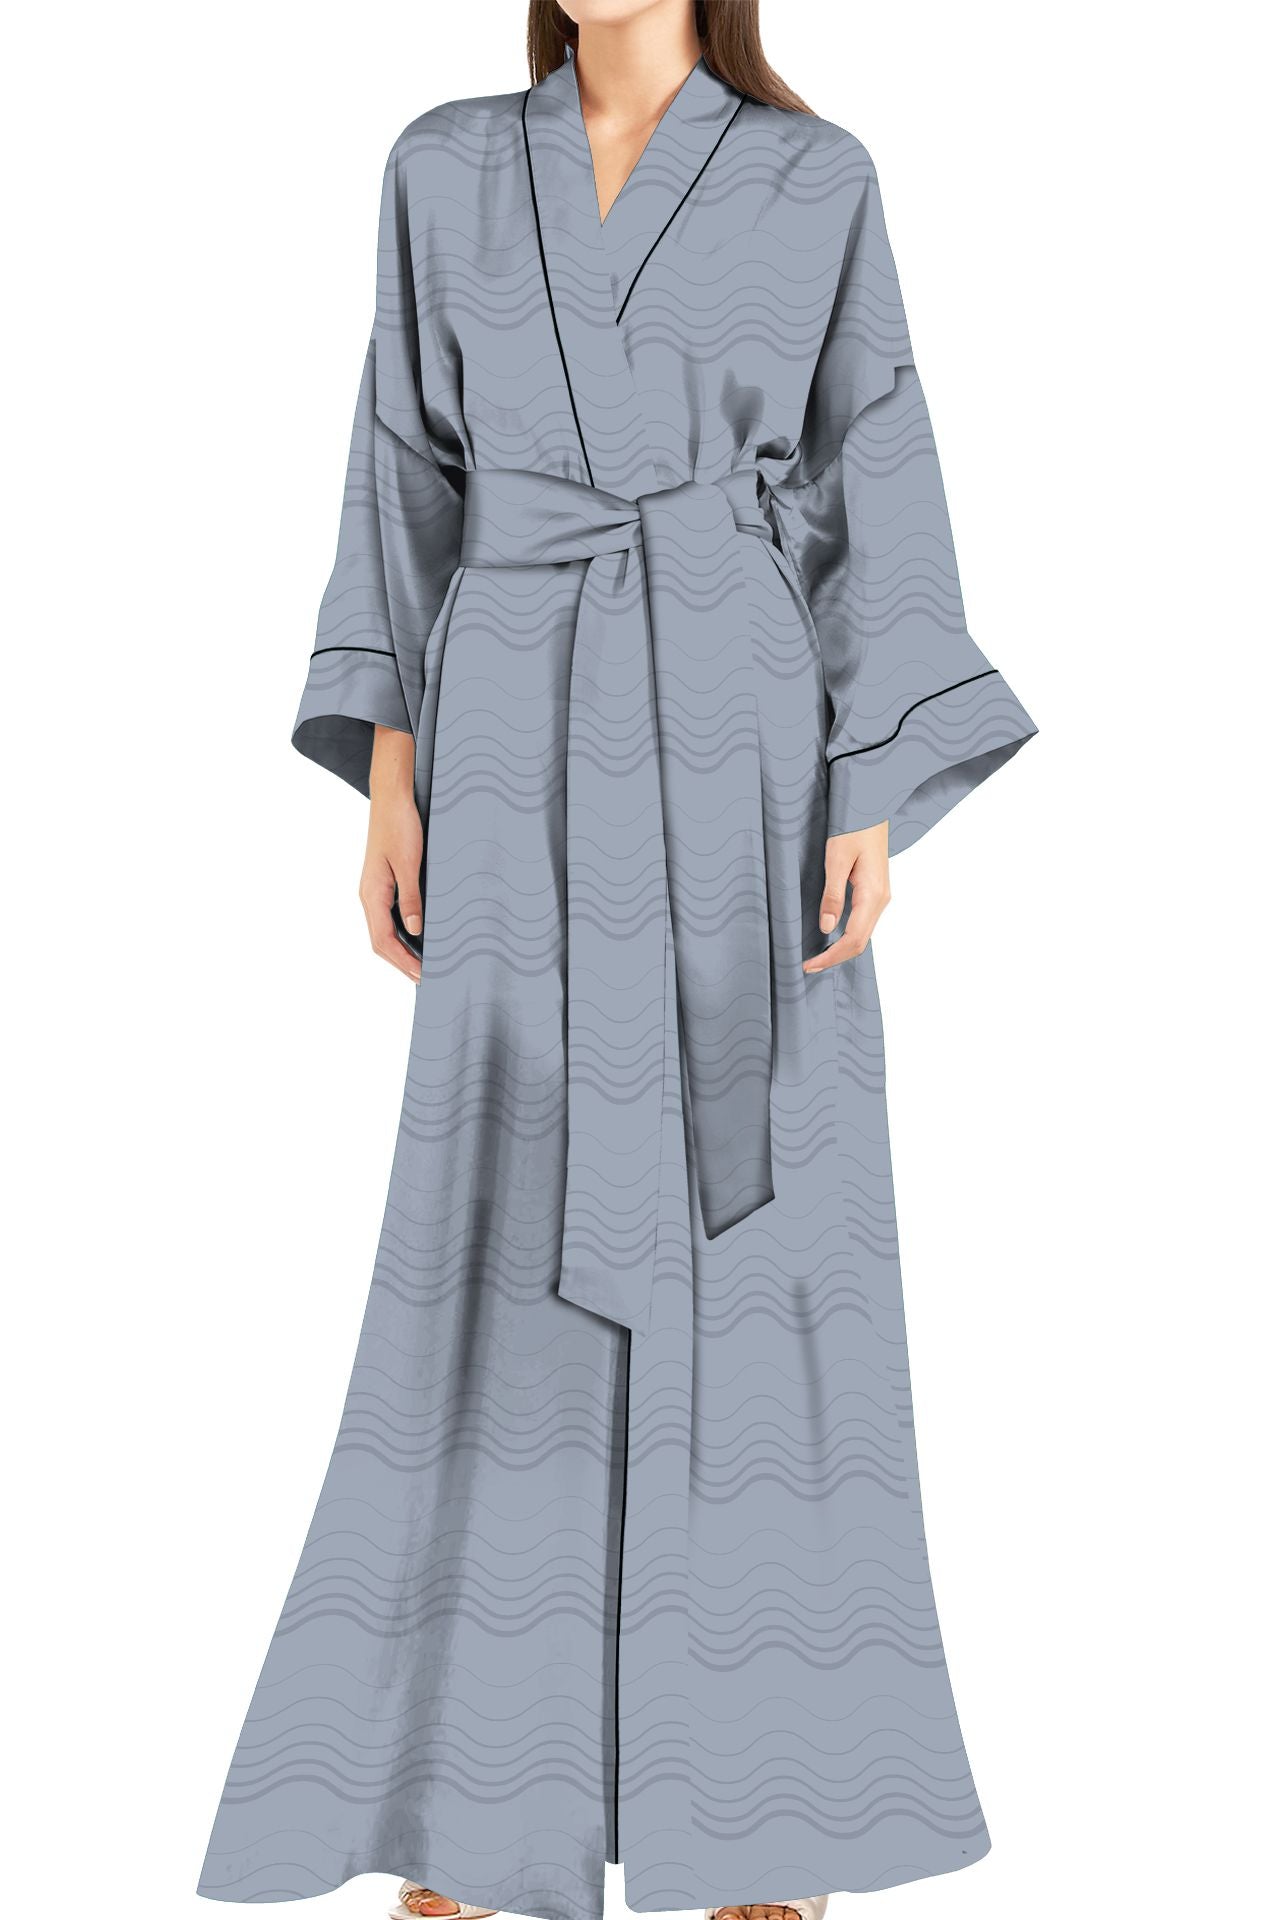 "silk kimono robe womens" "cute kimonos" "gray kimono" "Kyle X Shahida"